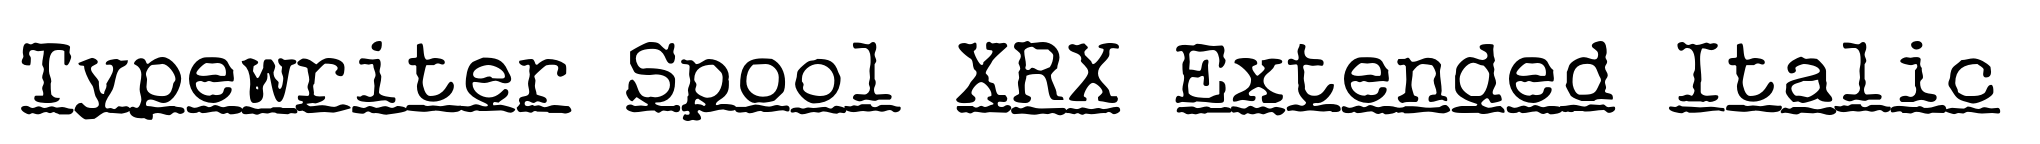 Typewriter Spool XRX Extended Italic image